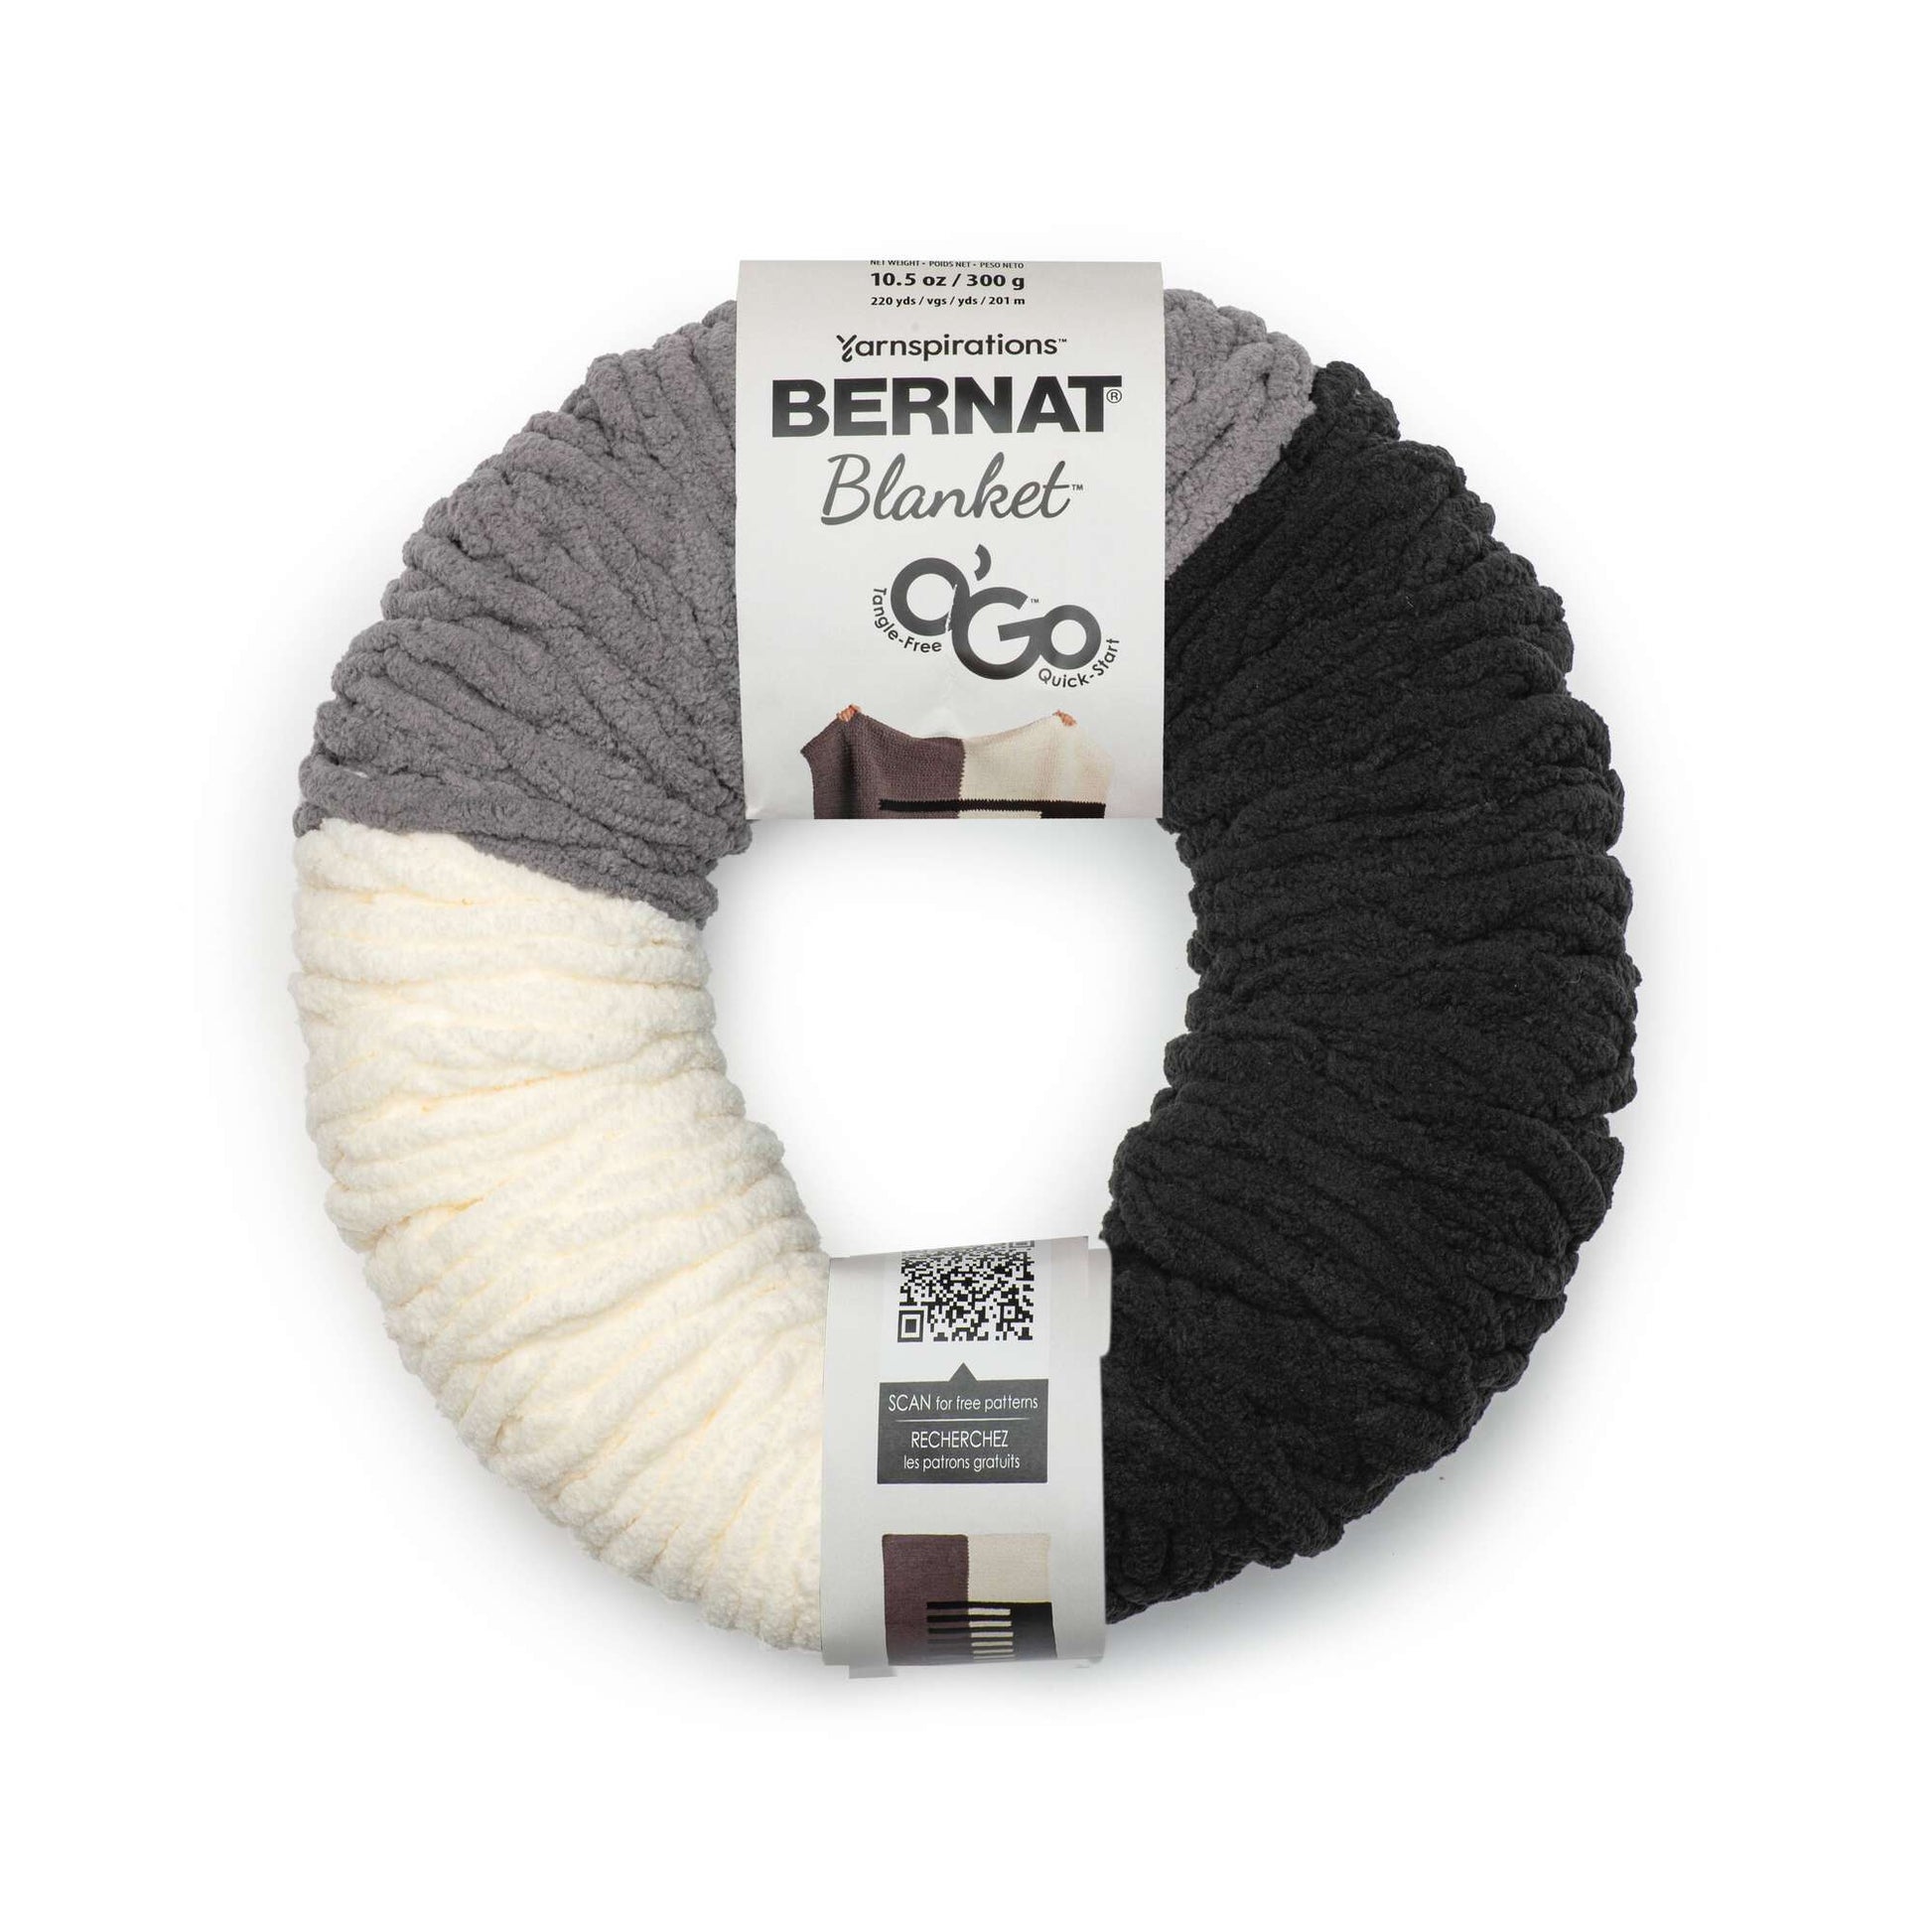 Yarnart BABY Soft Acrylic Yarn, 40 Colors, Crocheting Yarn, Knitting Yarn,  2 Sport Fine Weight Yarn, Amigurumi Yarn, Multiple Colors Option 